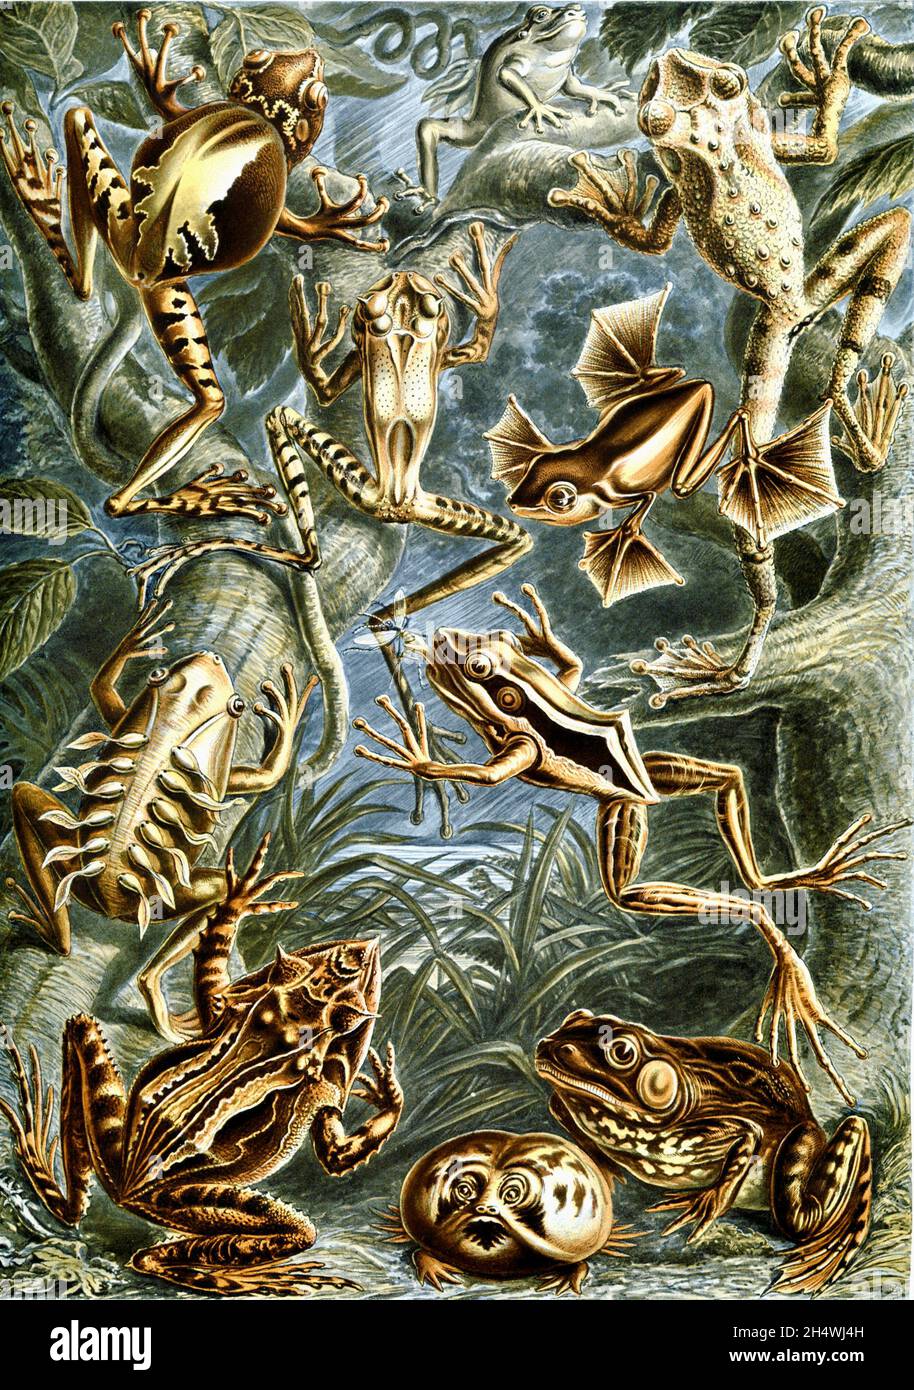 Ernst Haeckel - Batrachia - 1904 - grenouilles Banque D'Images